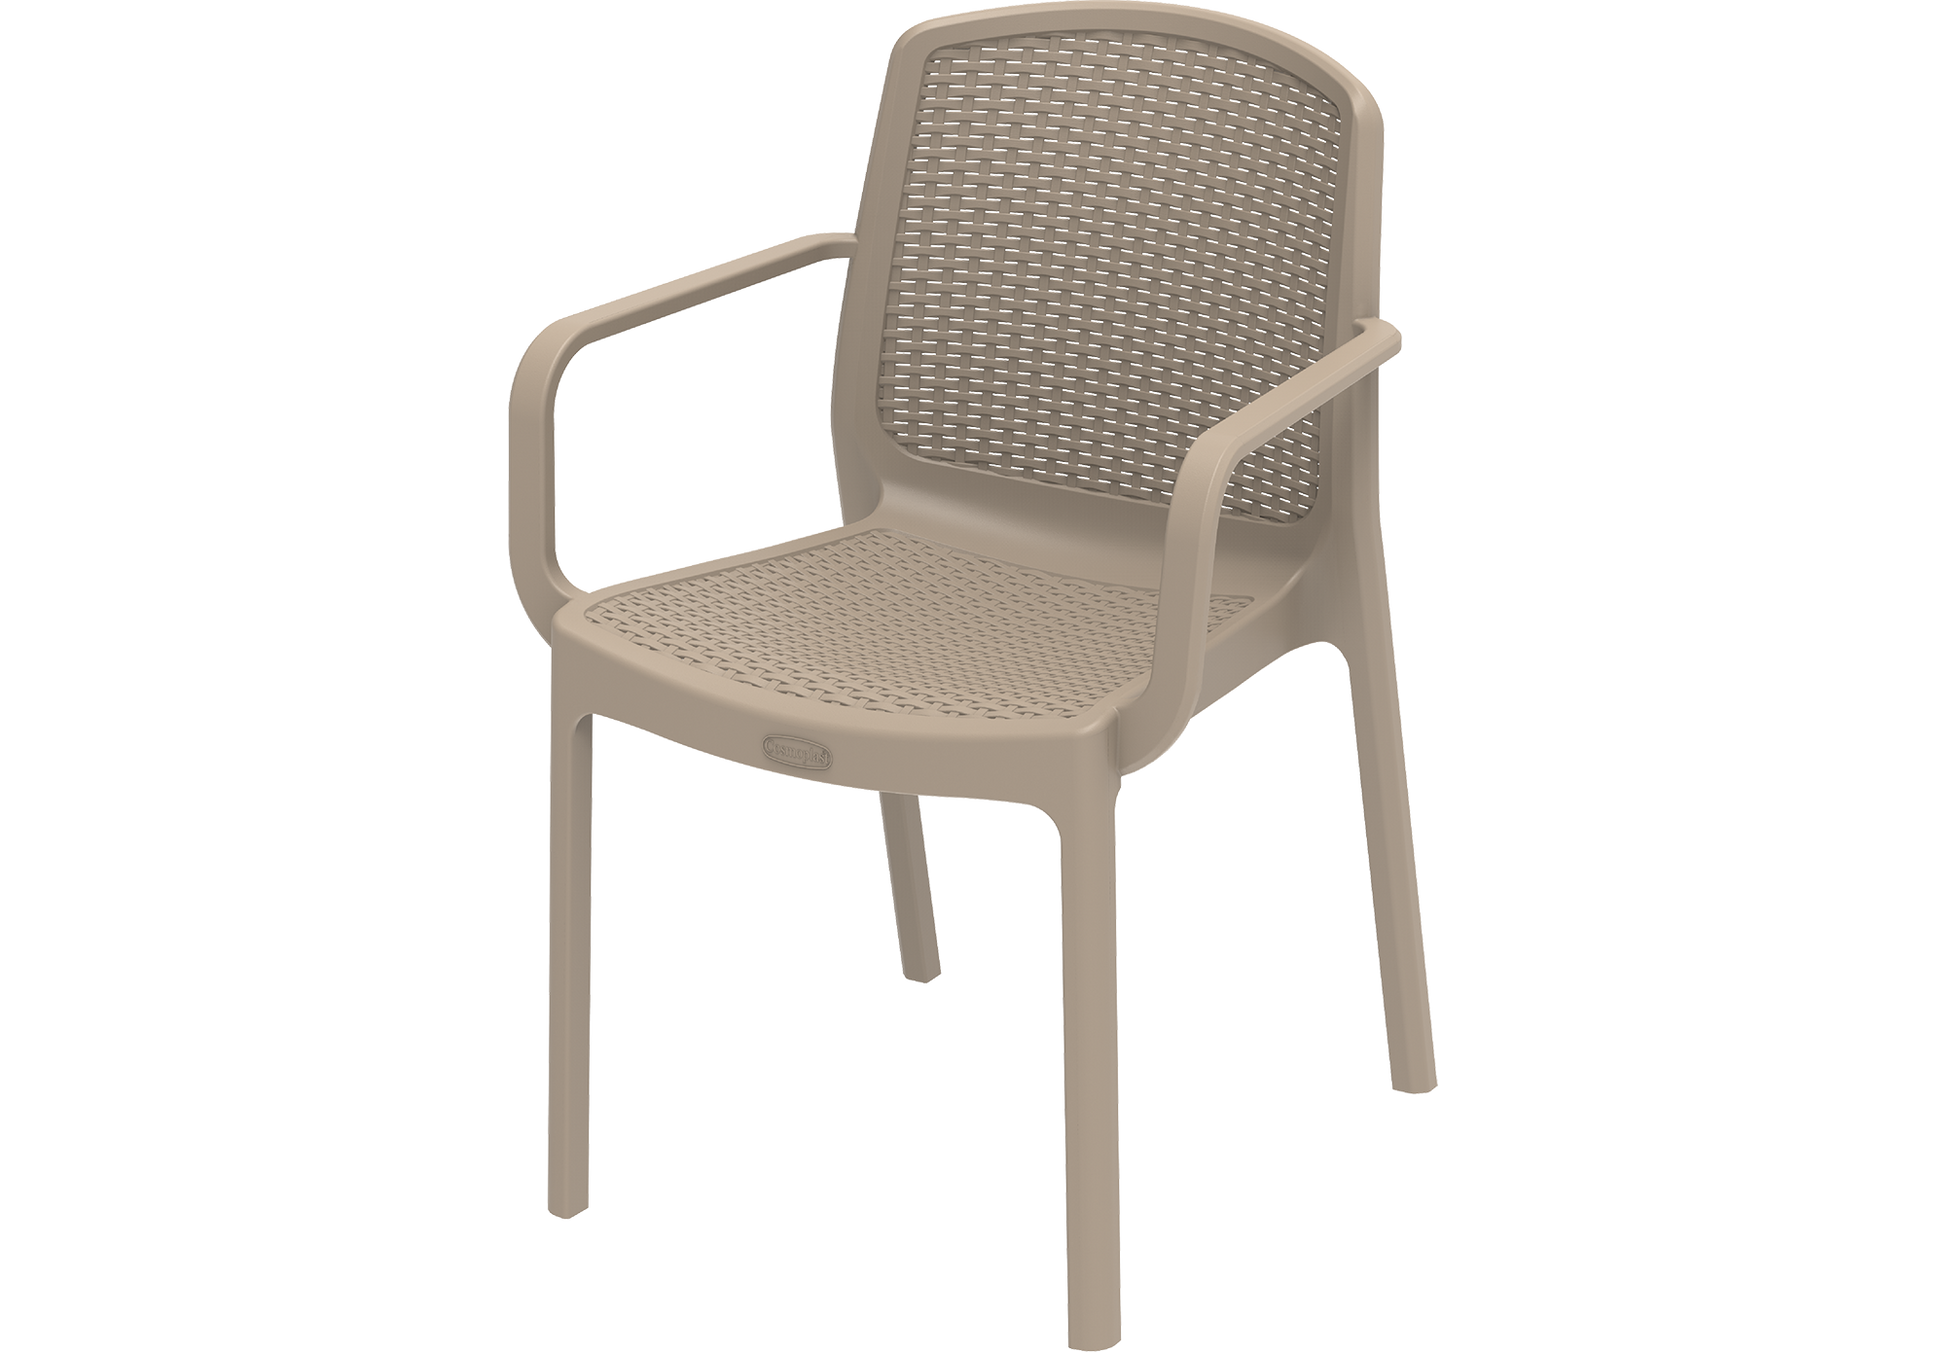 Cedarattan Plastic Garden Rattan Chair Warm Taupe 